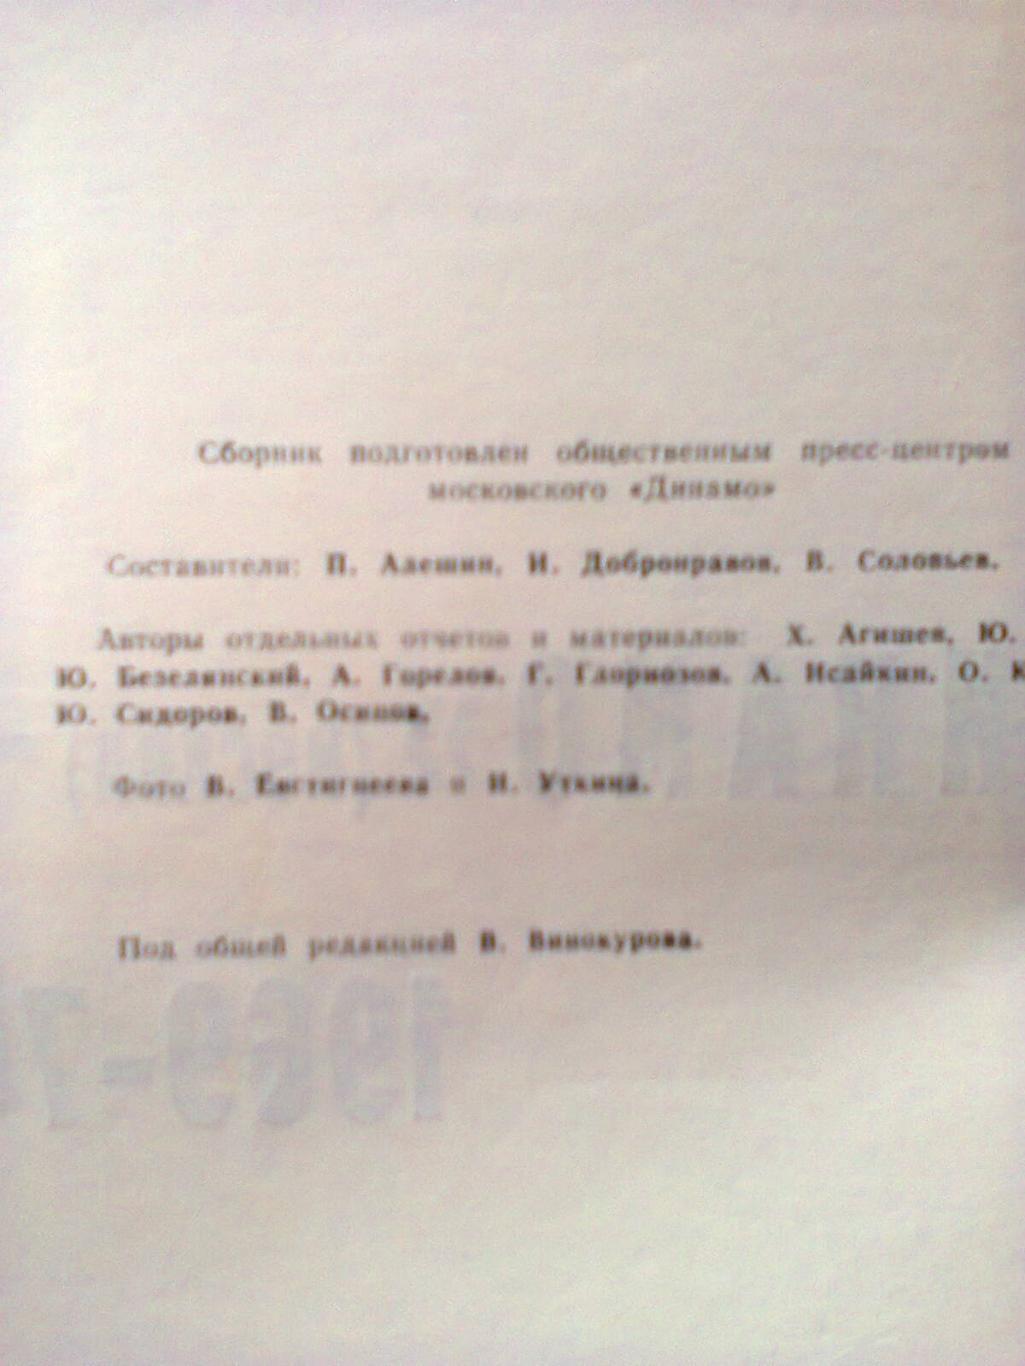 динамо москва календарь справочник 1969-1970 3